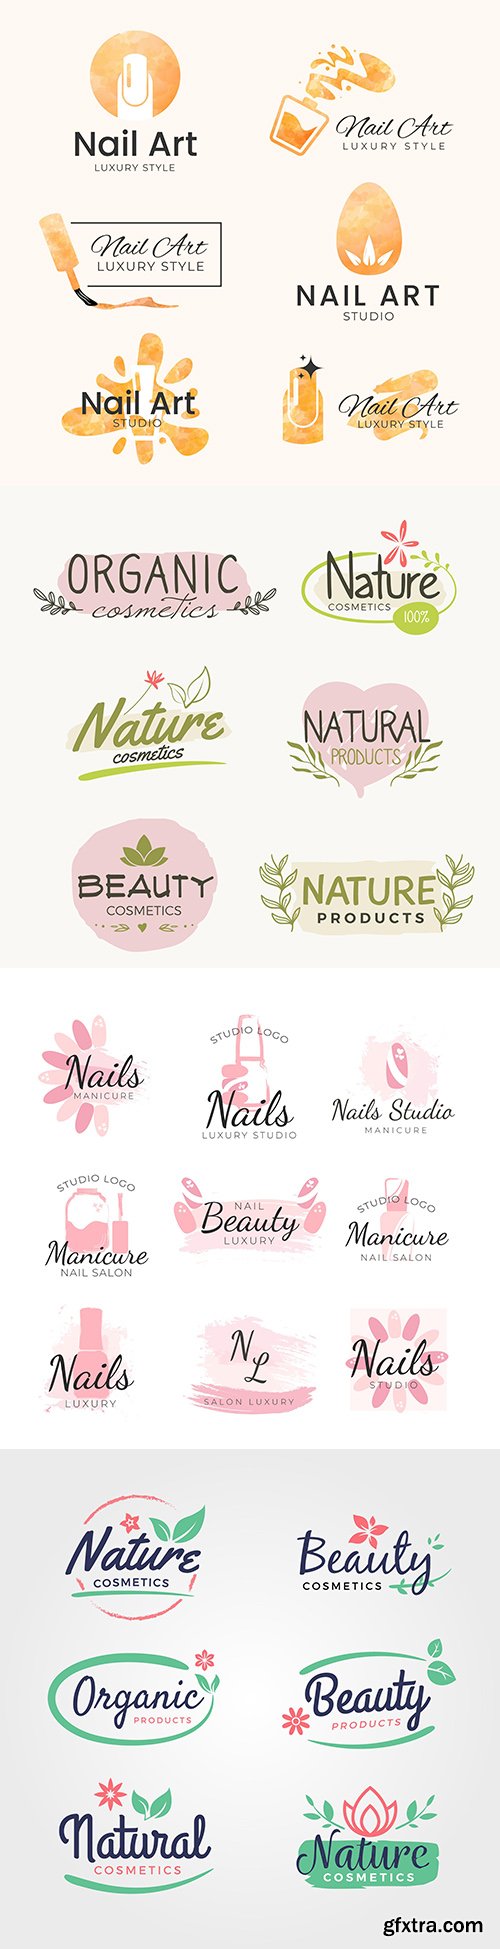 Brand name company logos business corporate design 33